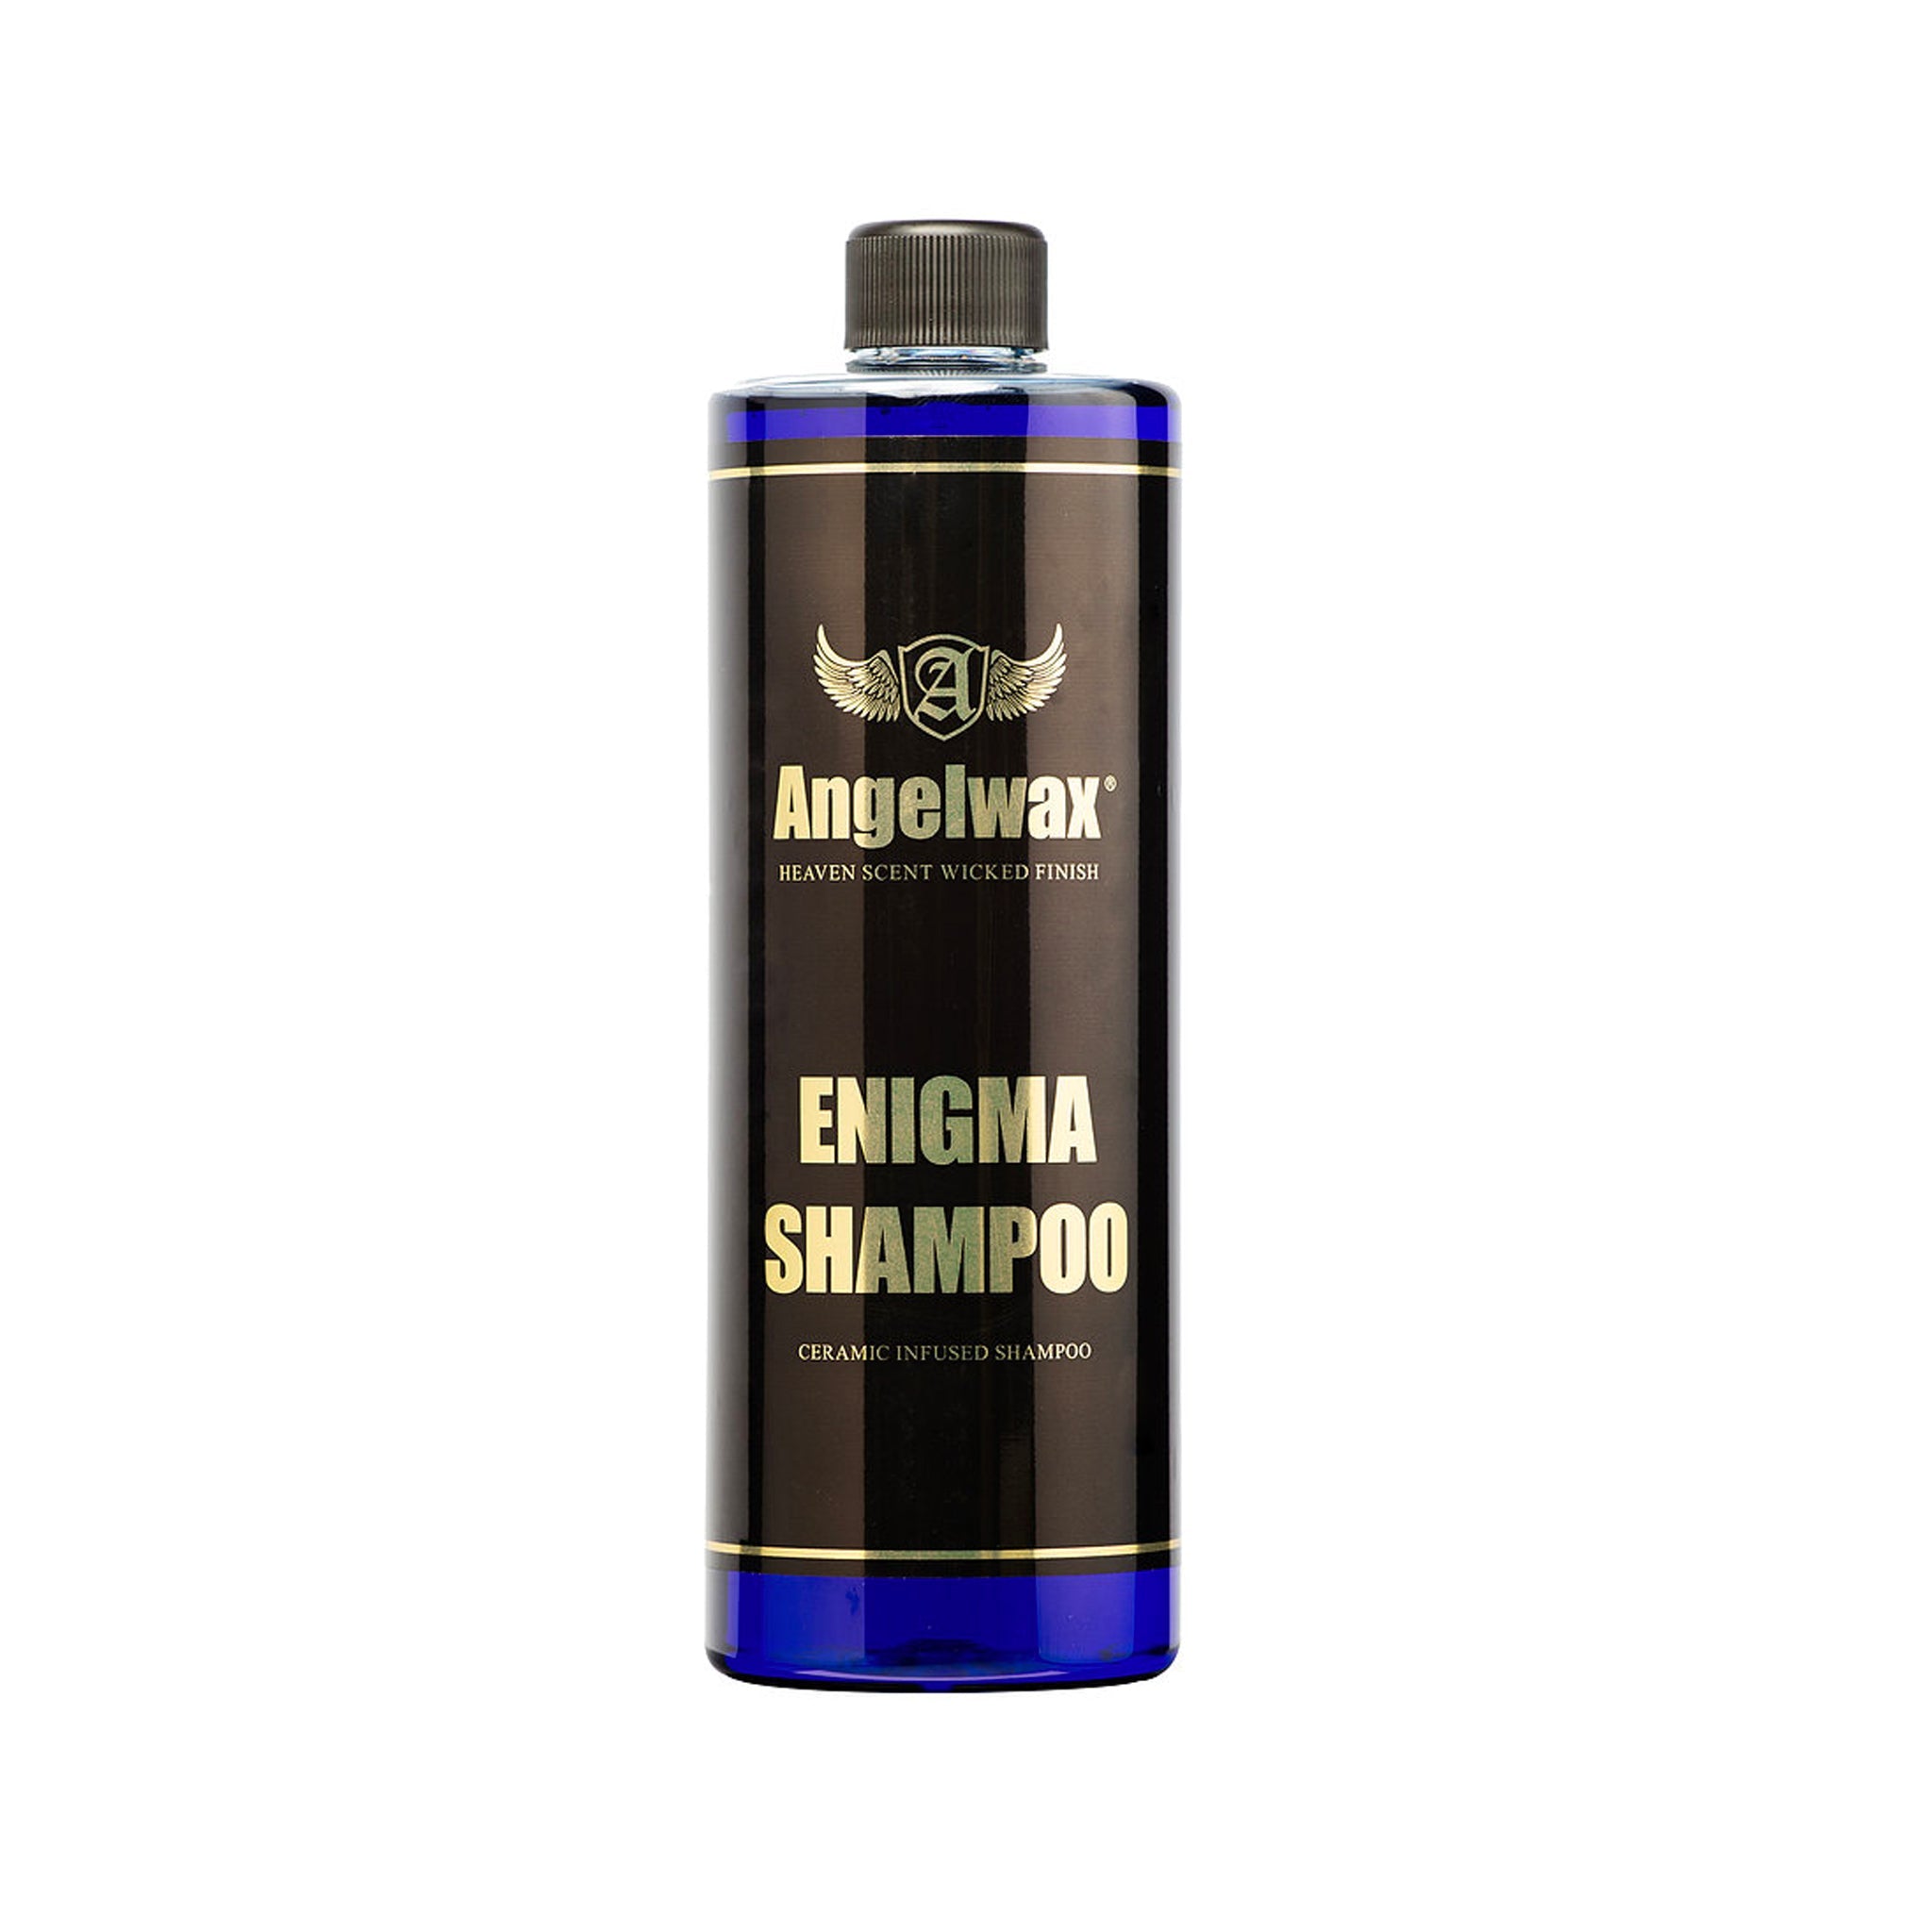 Angelwax Enigma Shampoo | Ceramic Infused Shampoo | 500mL